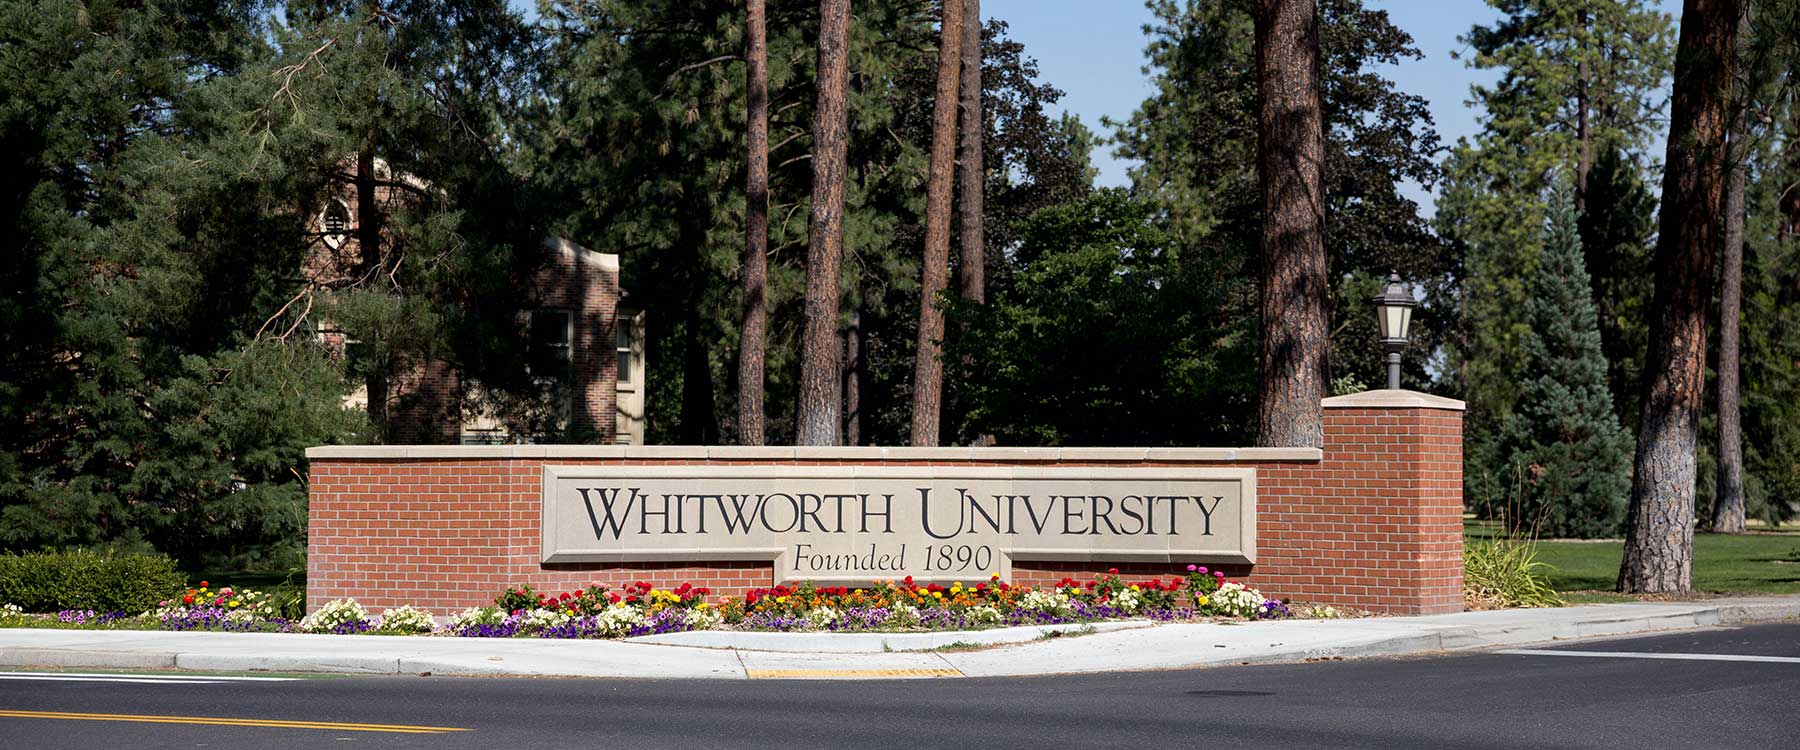 Whitworth University front entrance